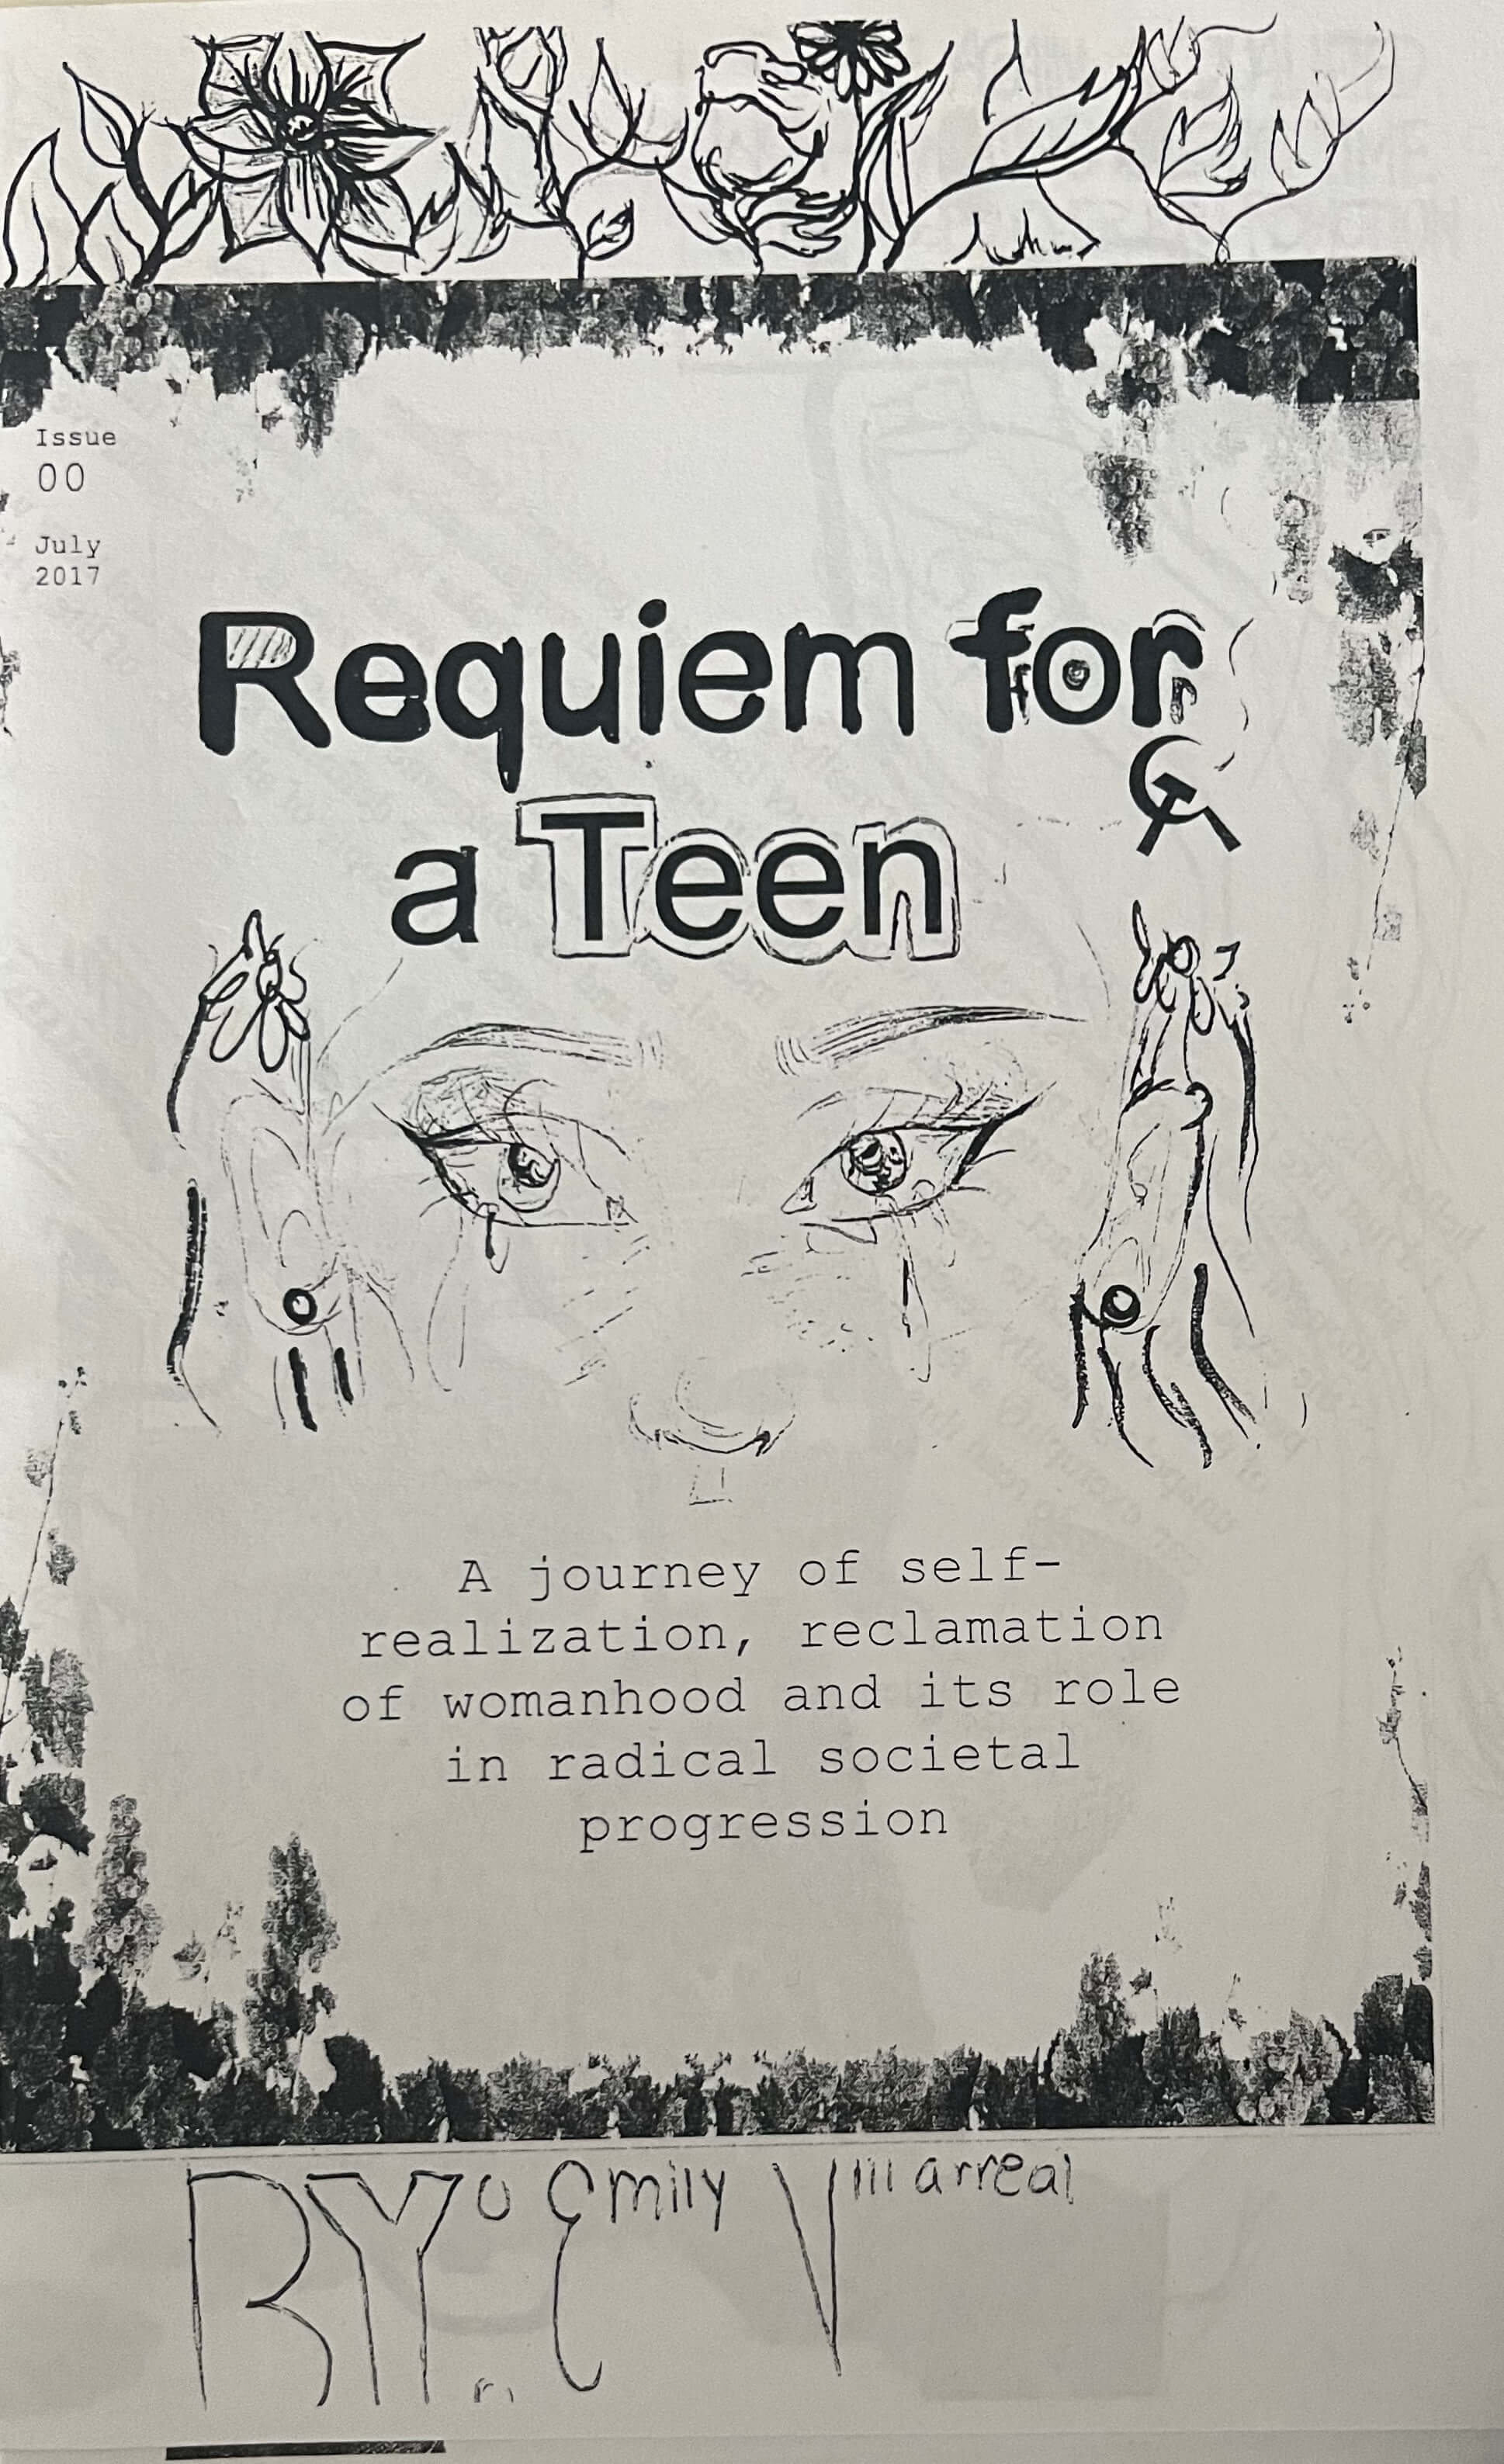 cover of zine "requiem for a teen"